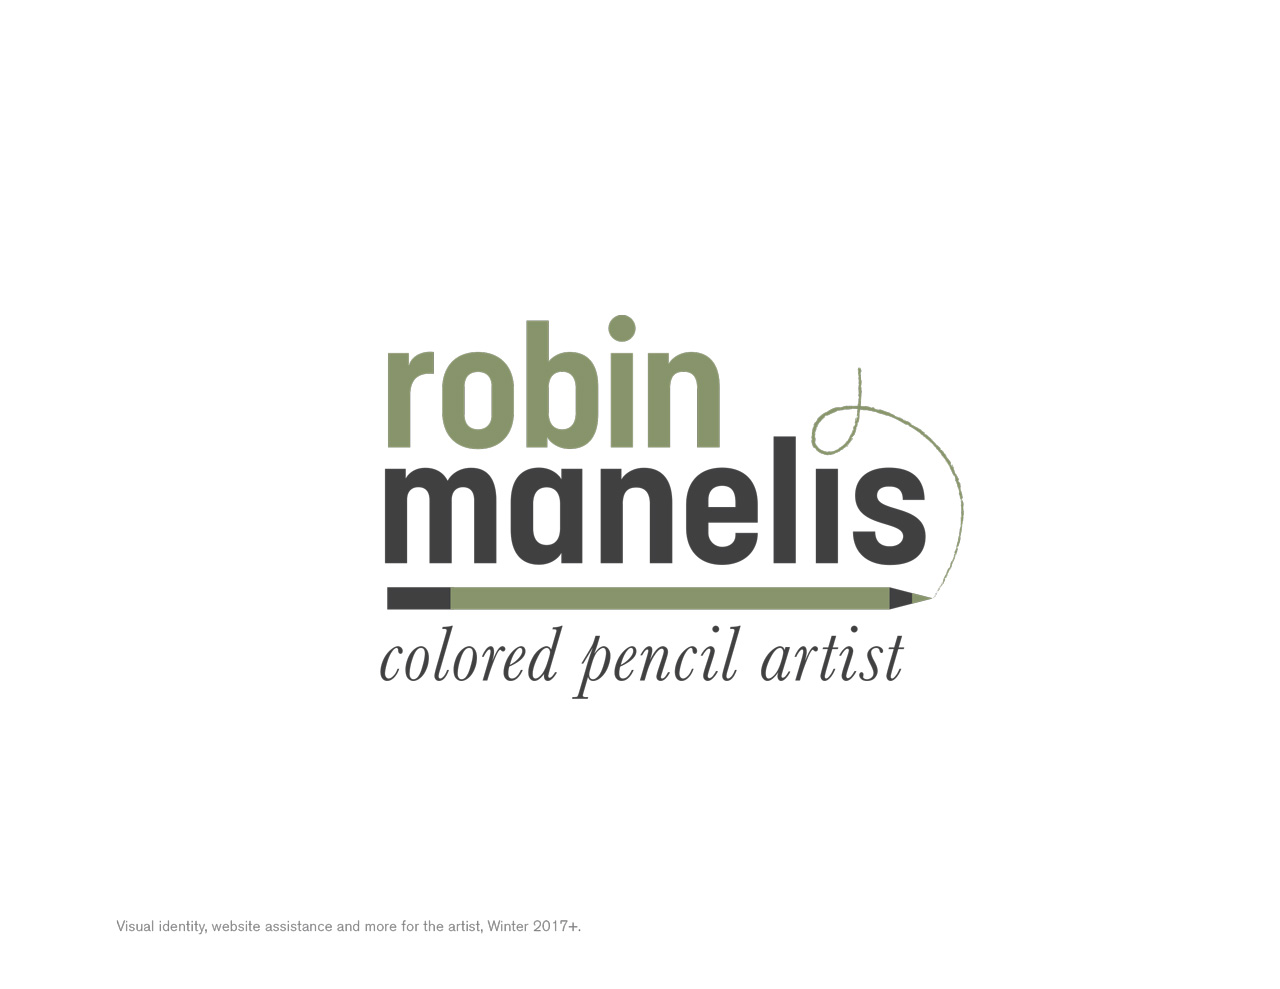 Robin Manelis colored pencil artist